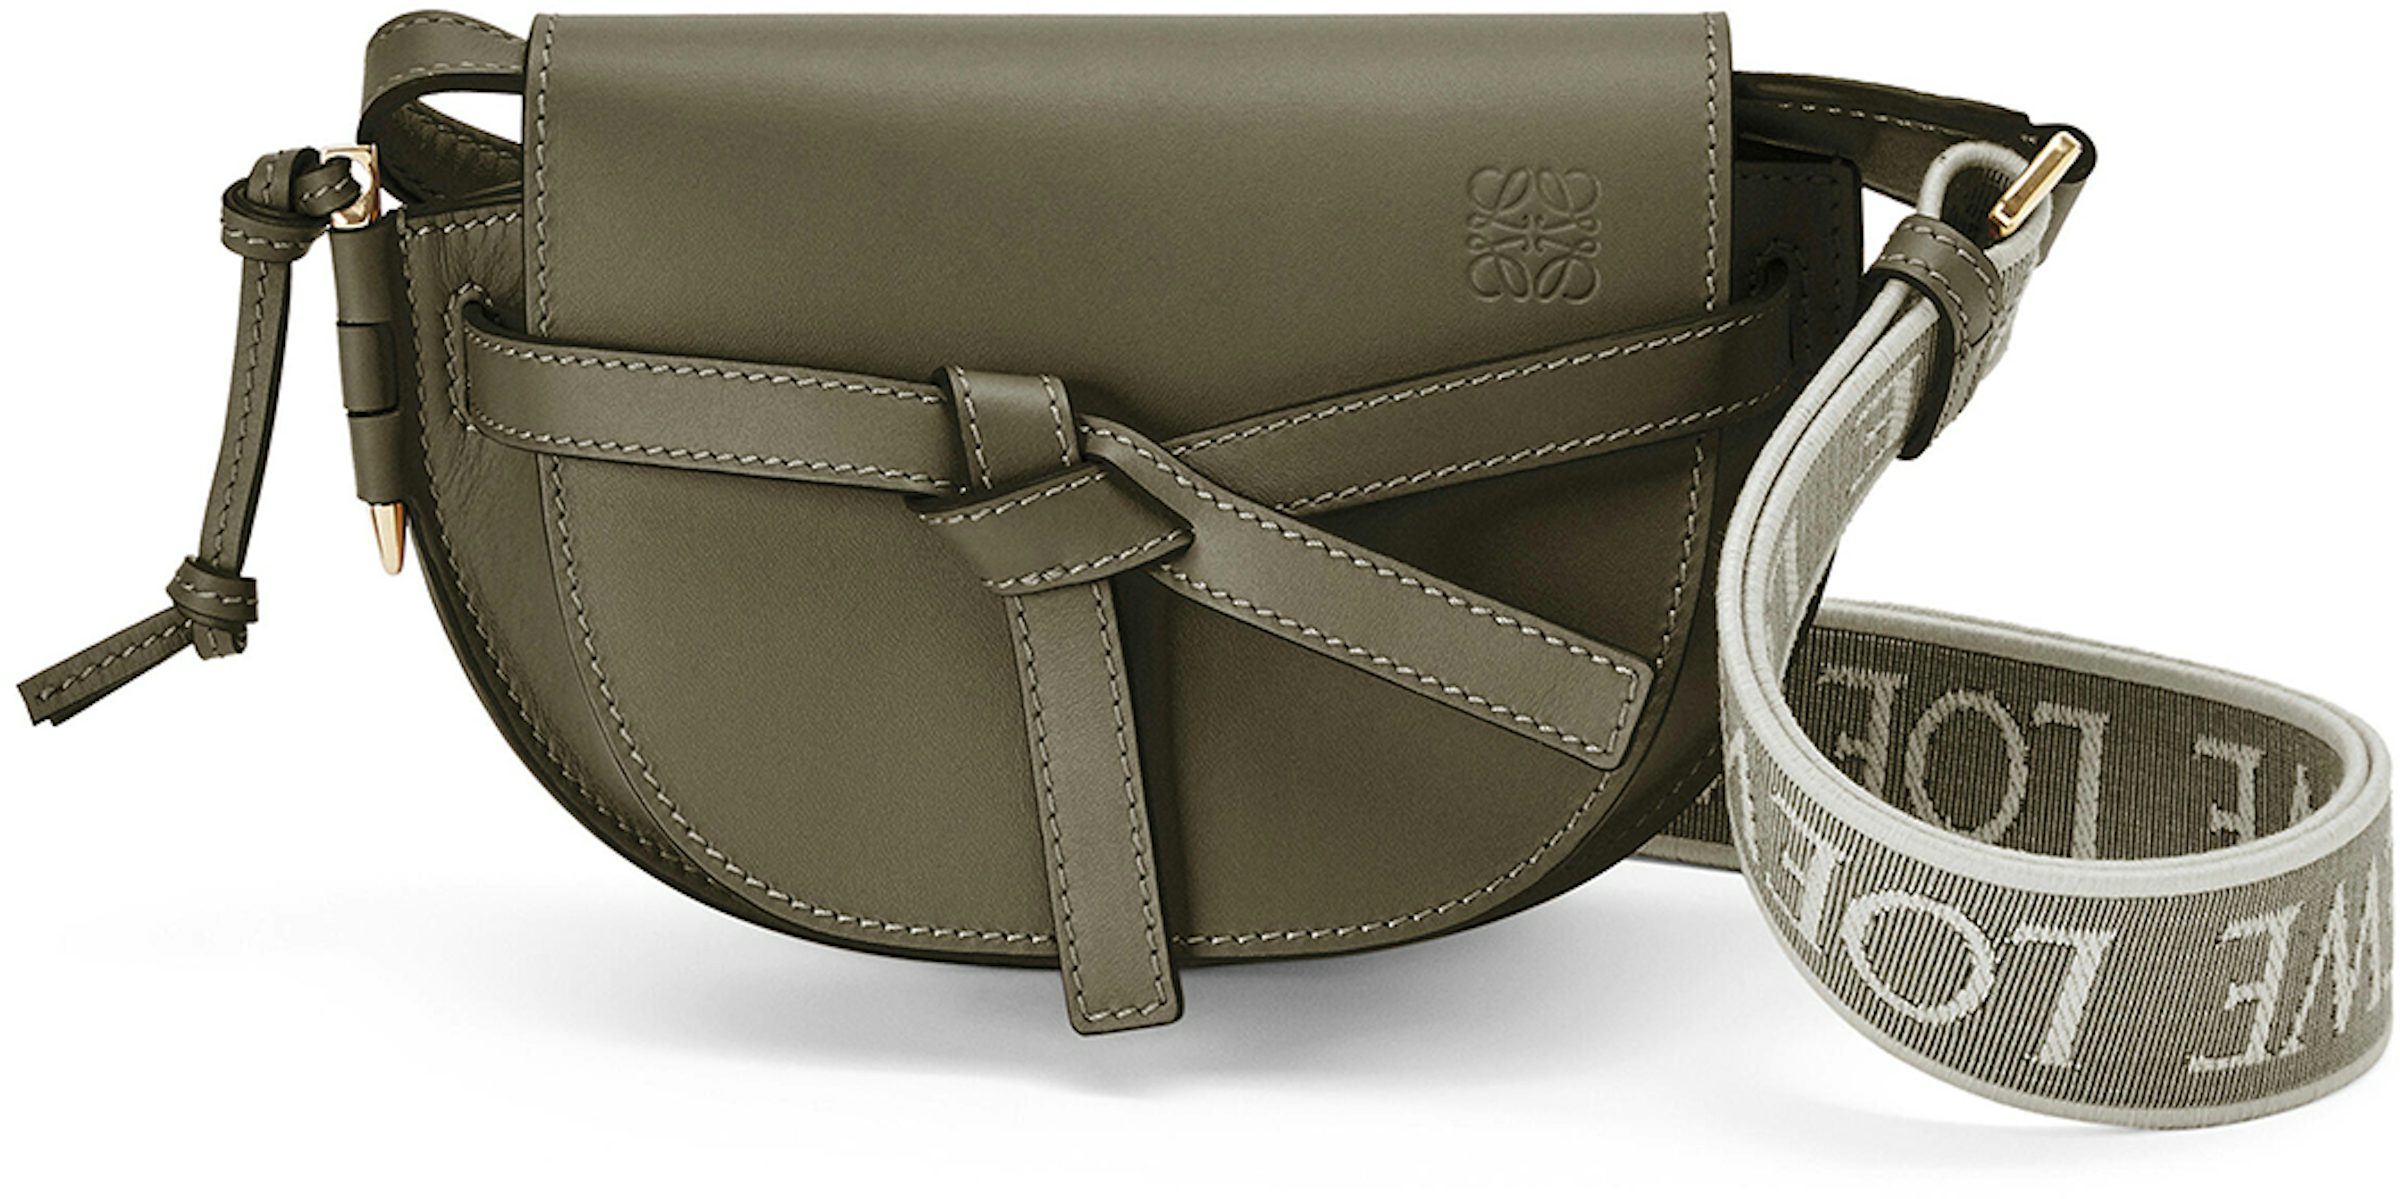 Mini Gate Dual bag in soft calfskin and jacquard Olive Green/Khaki